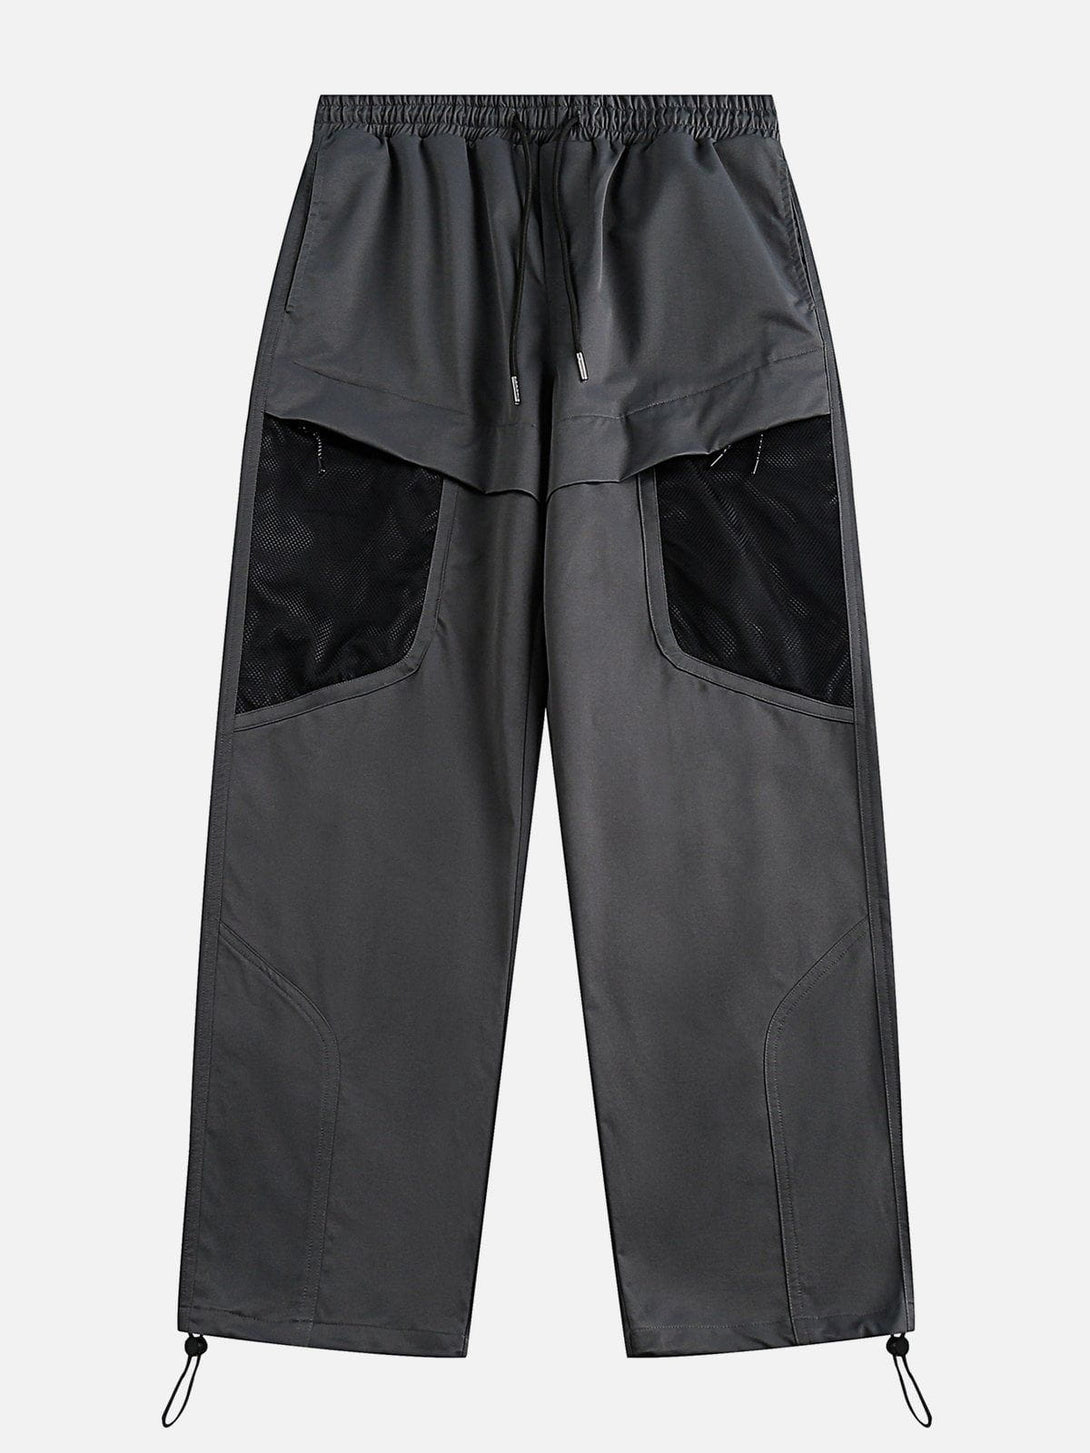 Levefly - Mesh Pocket Cargo Pants - Streetwear Fashion - levefly.com